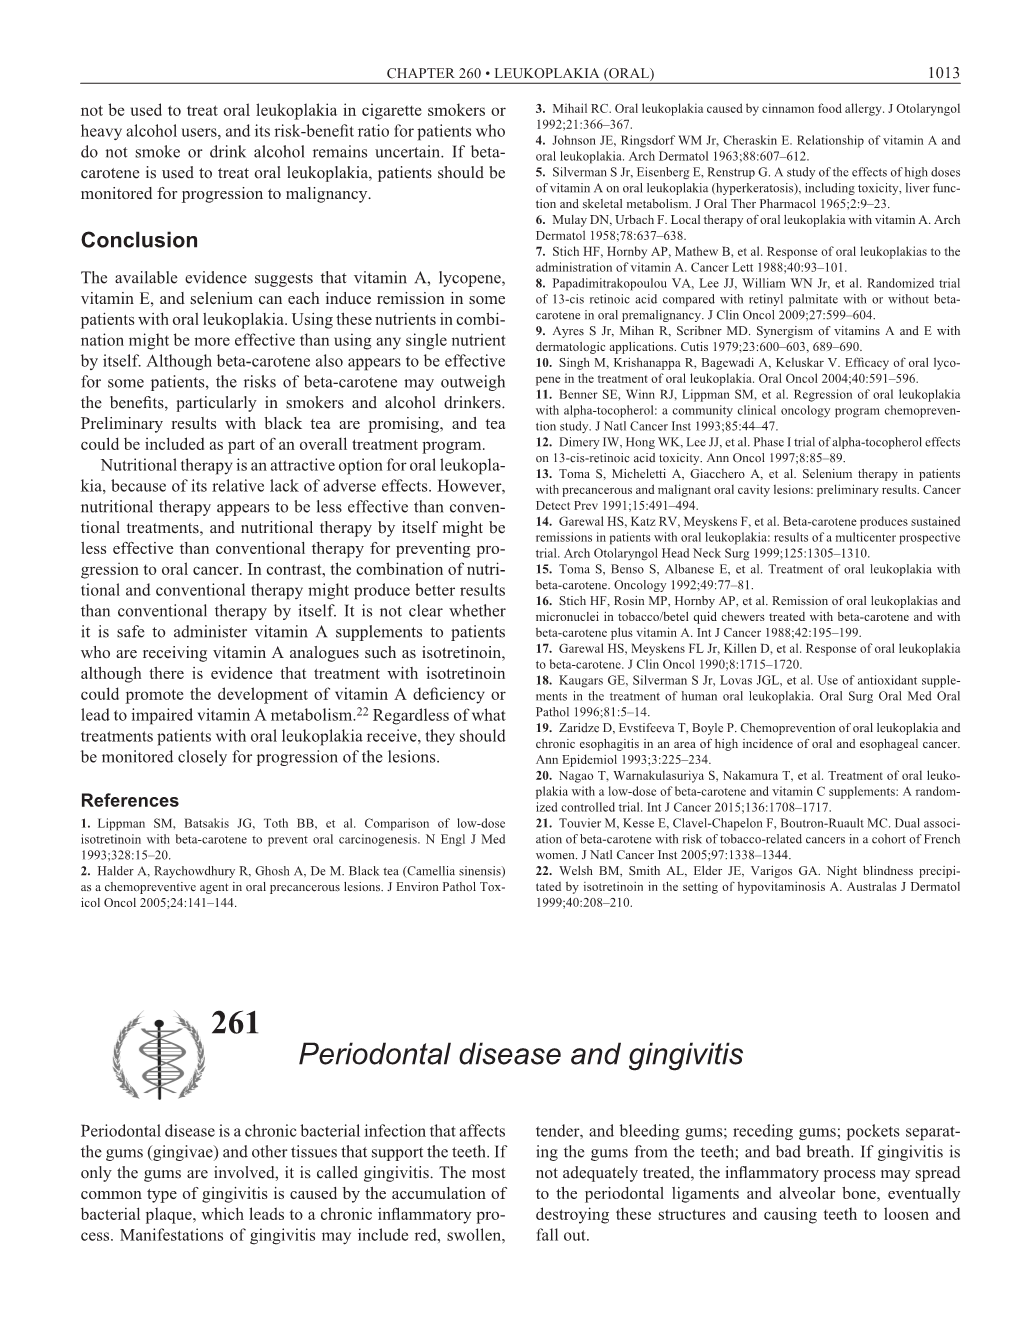 Periodontal Disease and Gingivitis